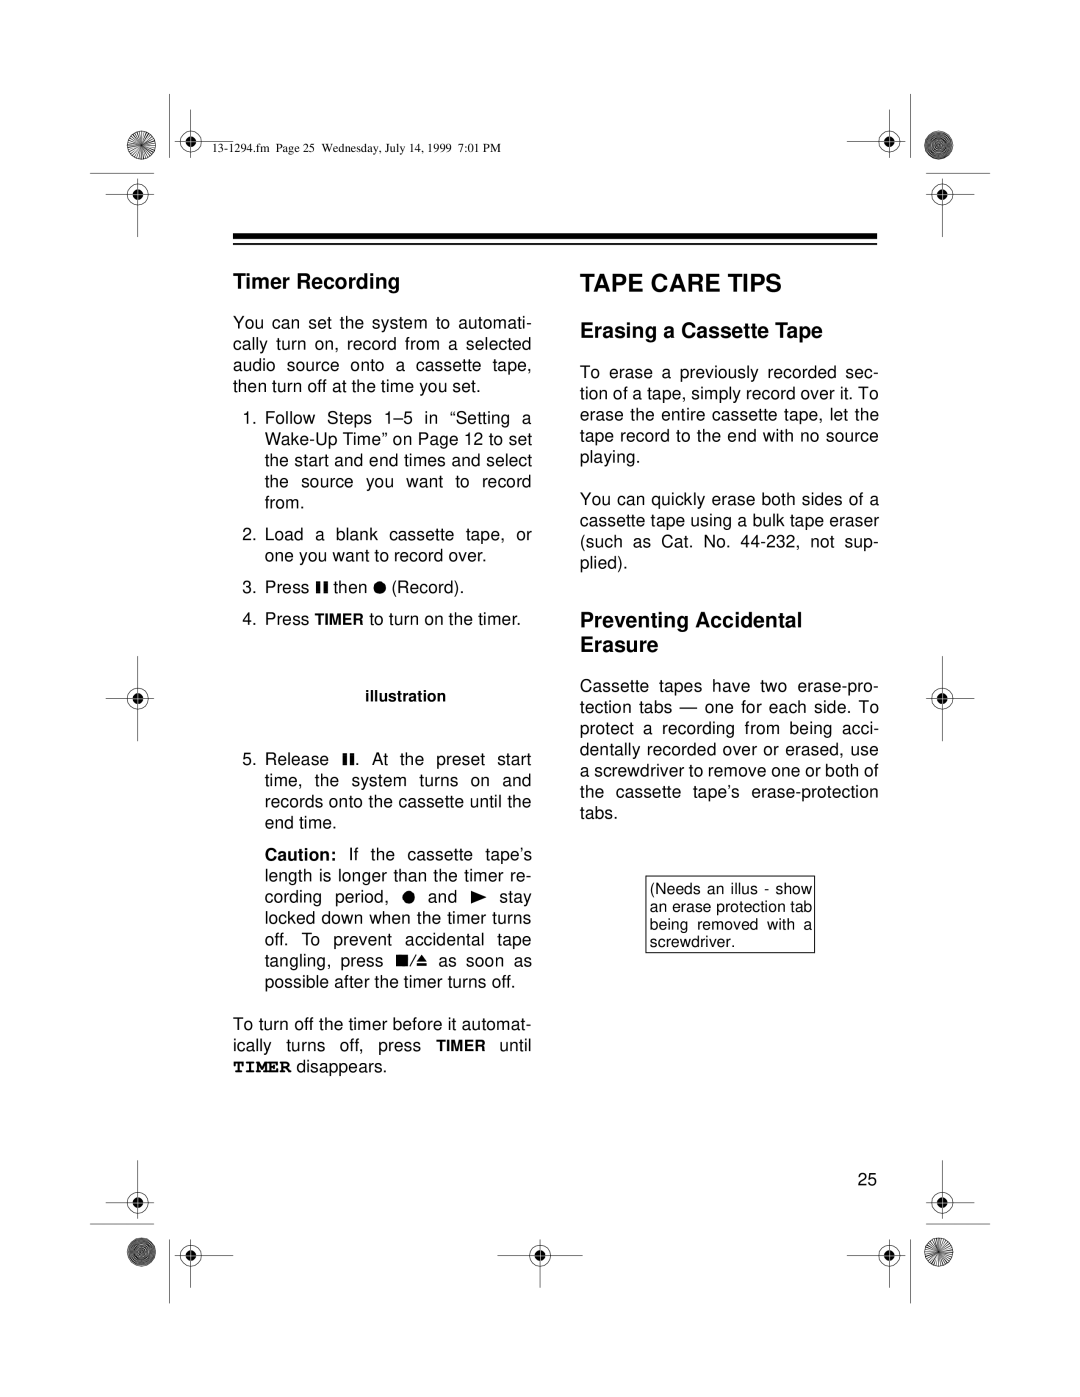 Optimus SYSTEM 746 owner manual Tape Care Tips, Timer Recording, Erasing a Cassette Tape, Preventing Accidental Erasure 